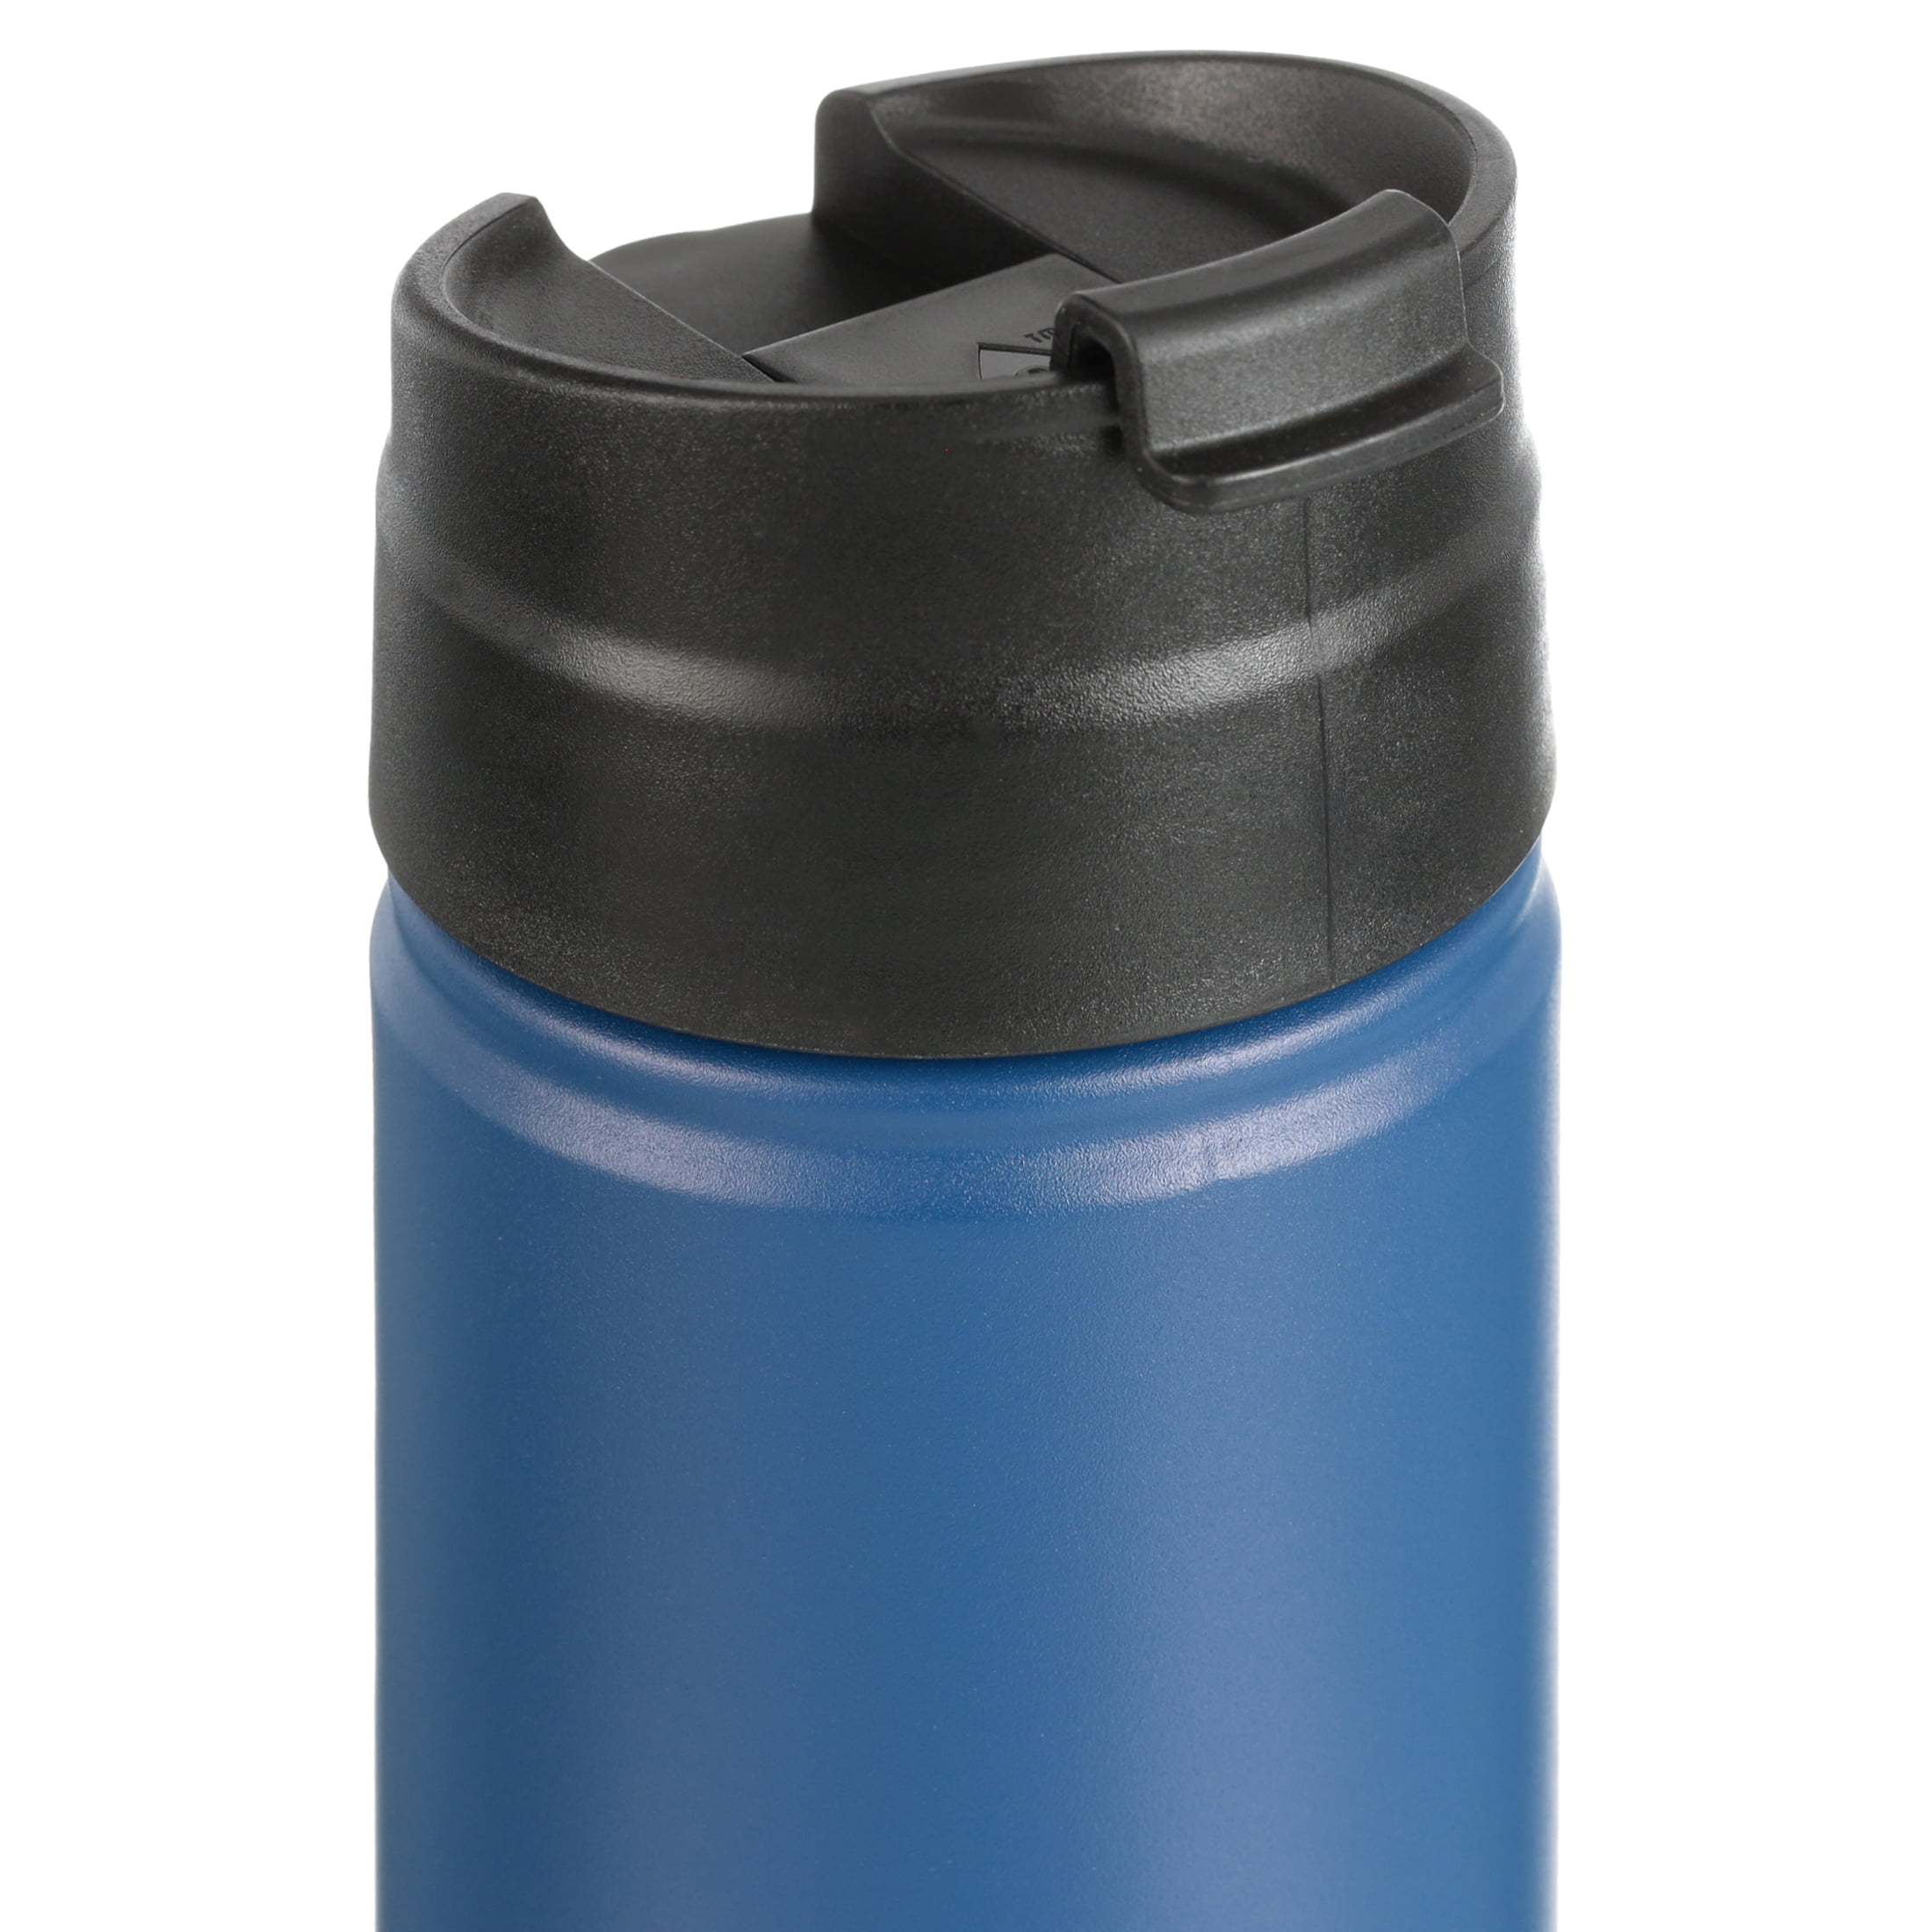 Plywell 16 oz. Blue Stainless Steel Coffee bottle, Tea Infuser